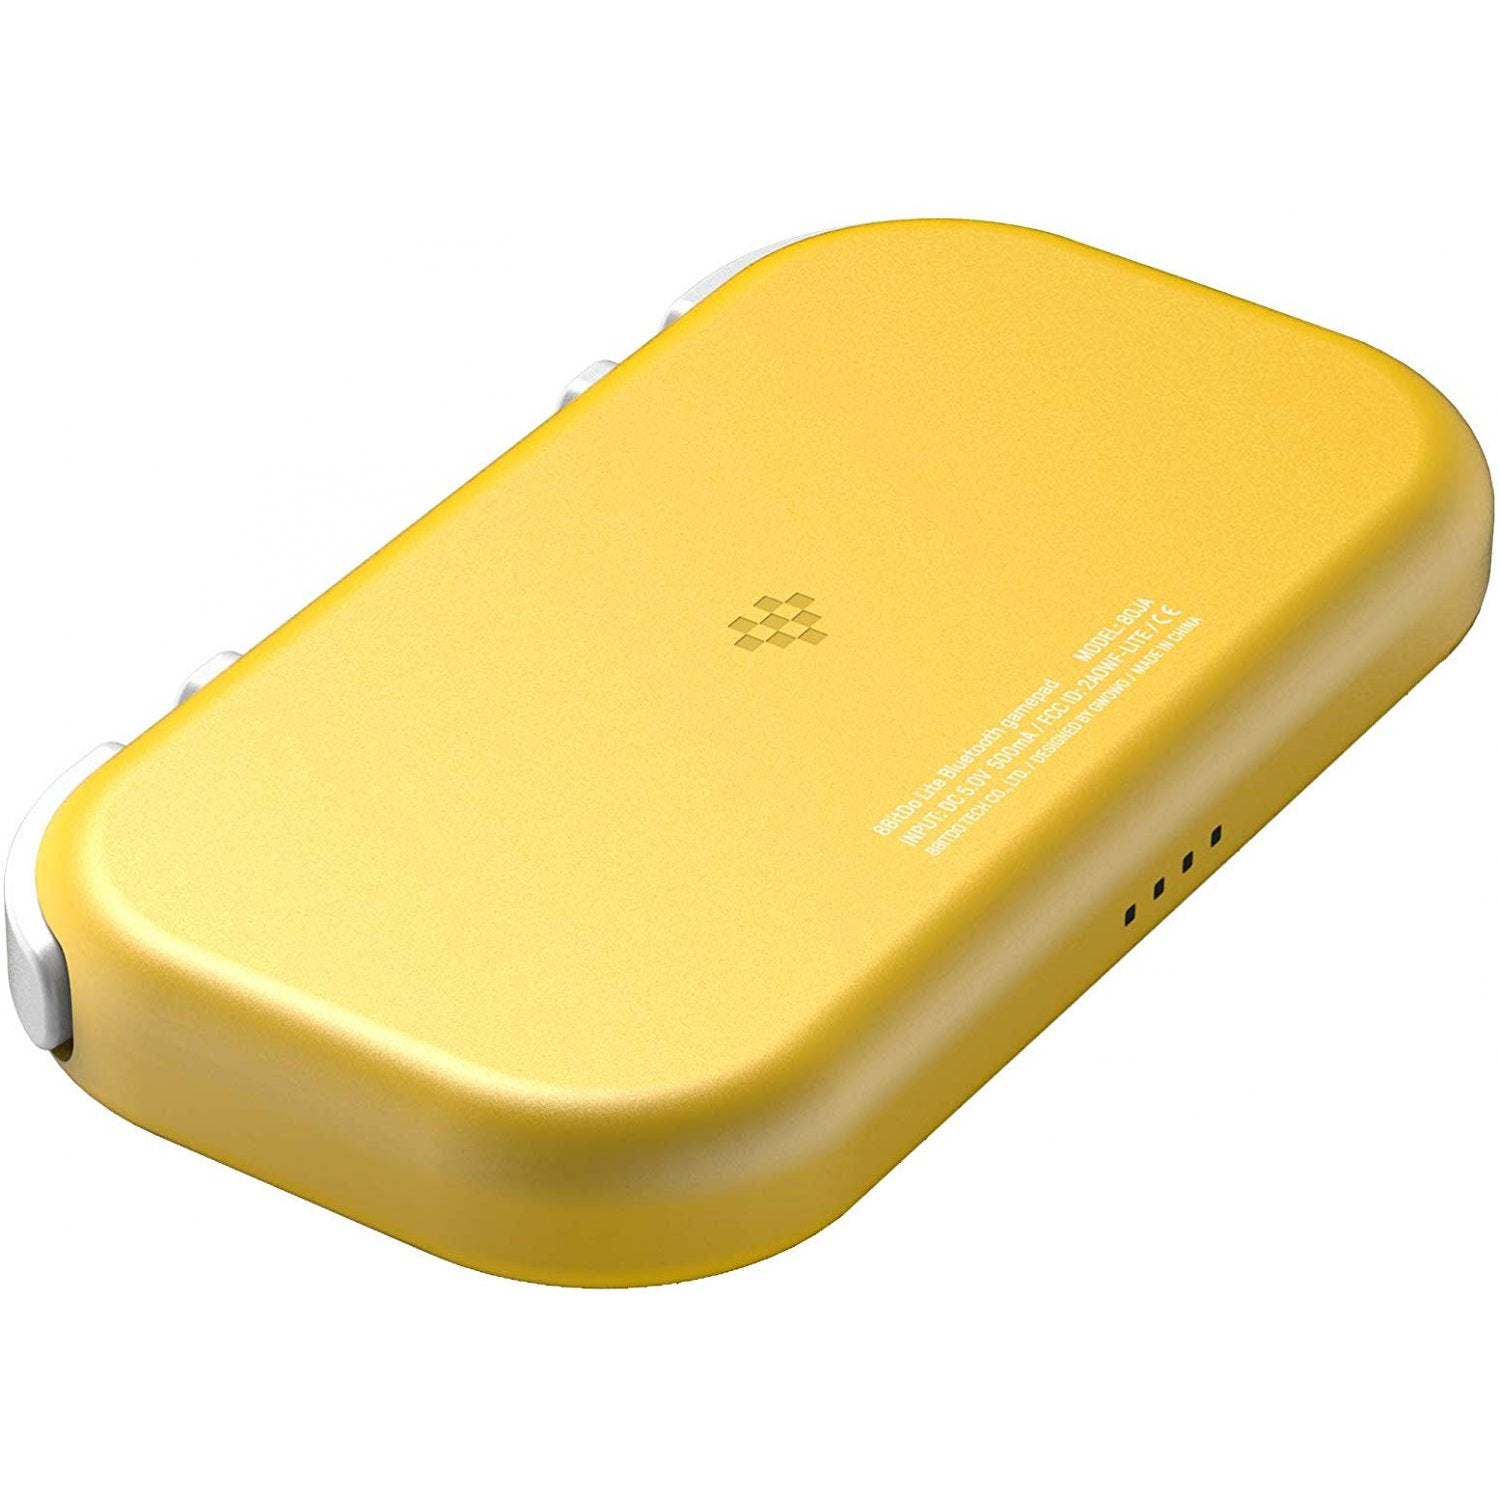 8BitDo Lite Bluetooth Gamepad - Yellow